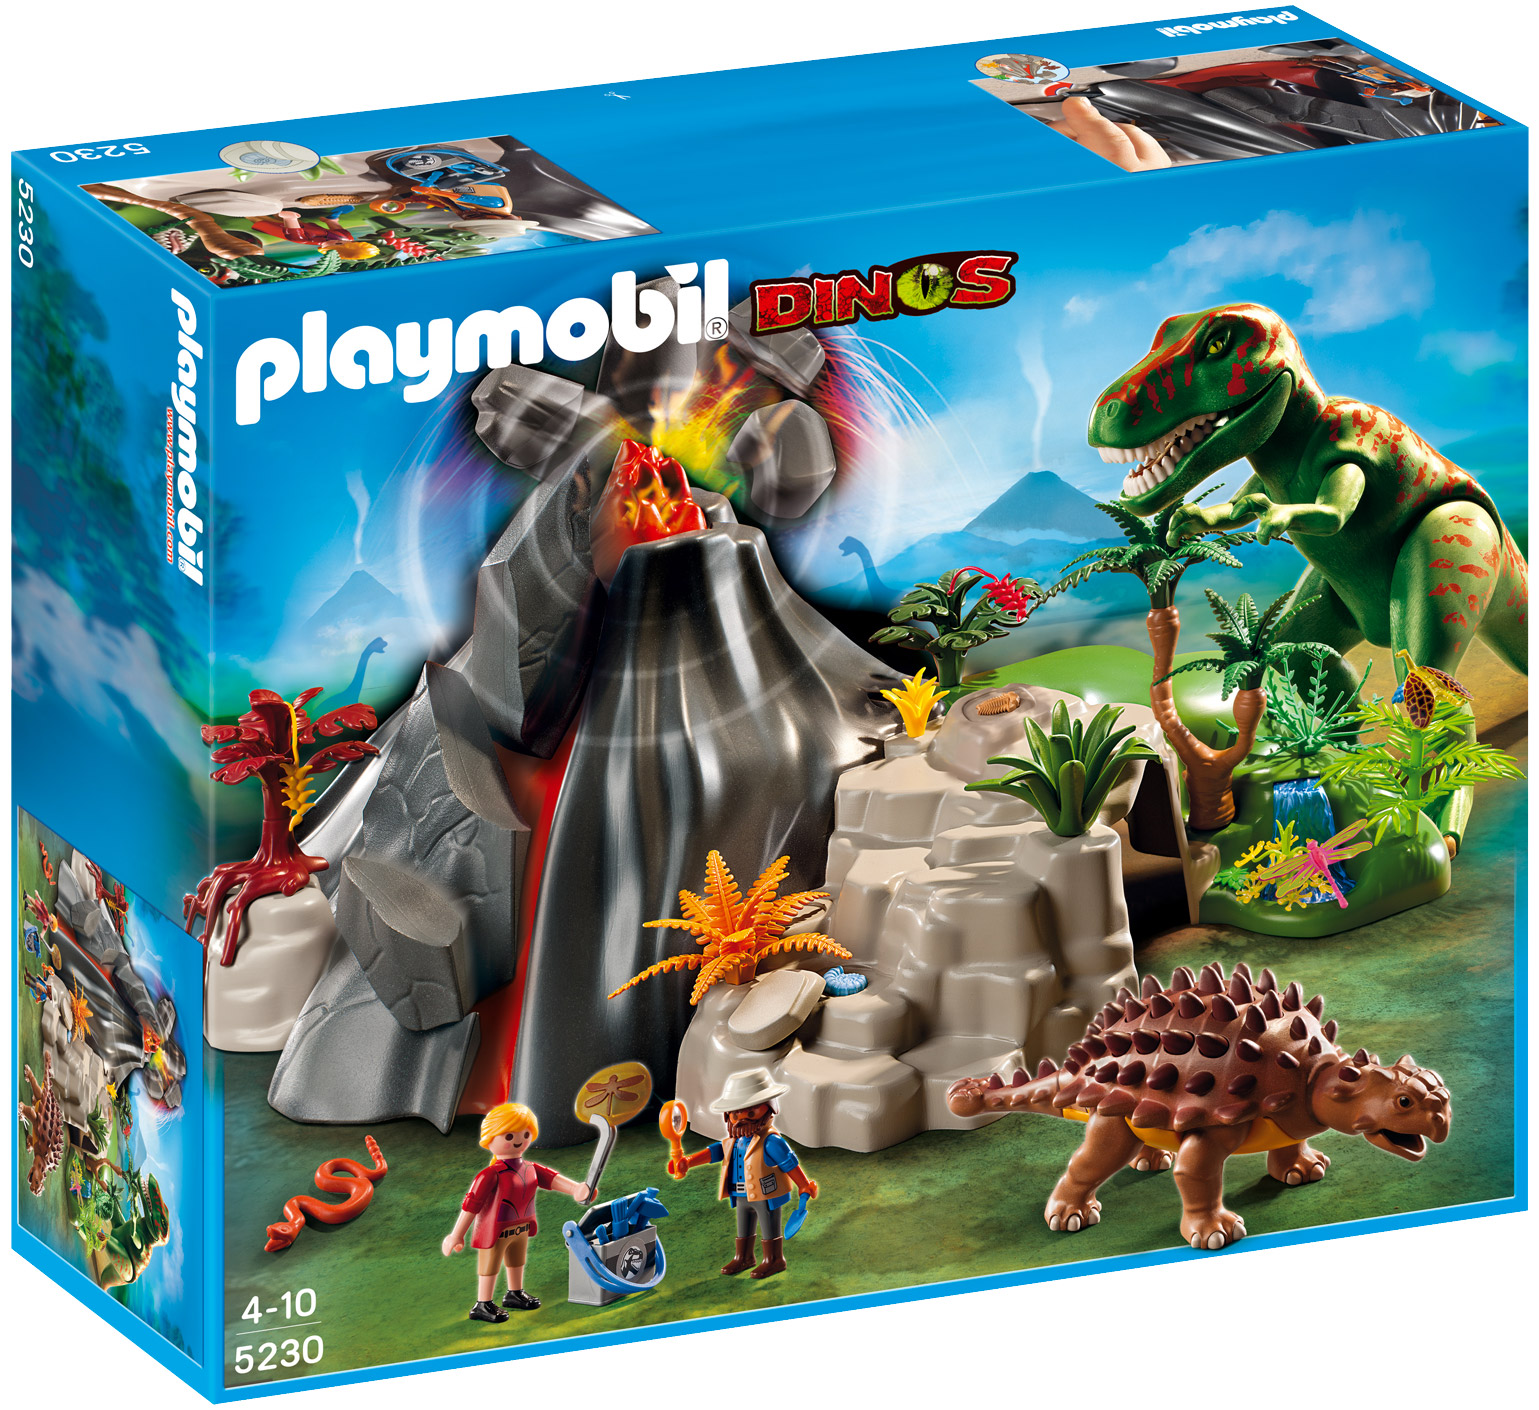 Playmobil Dinos 5230 pas cher, Tyrannosaure et Saichania avec volcan